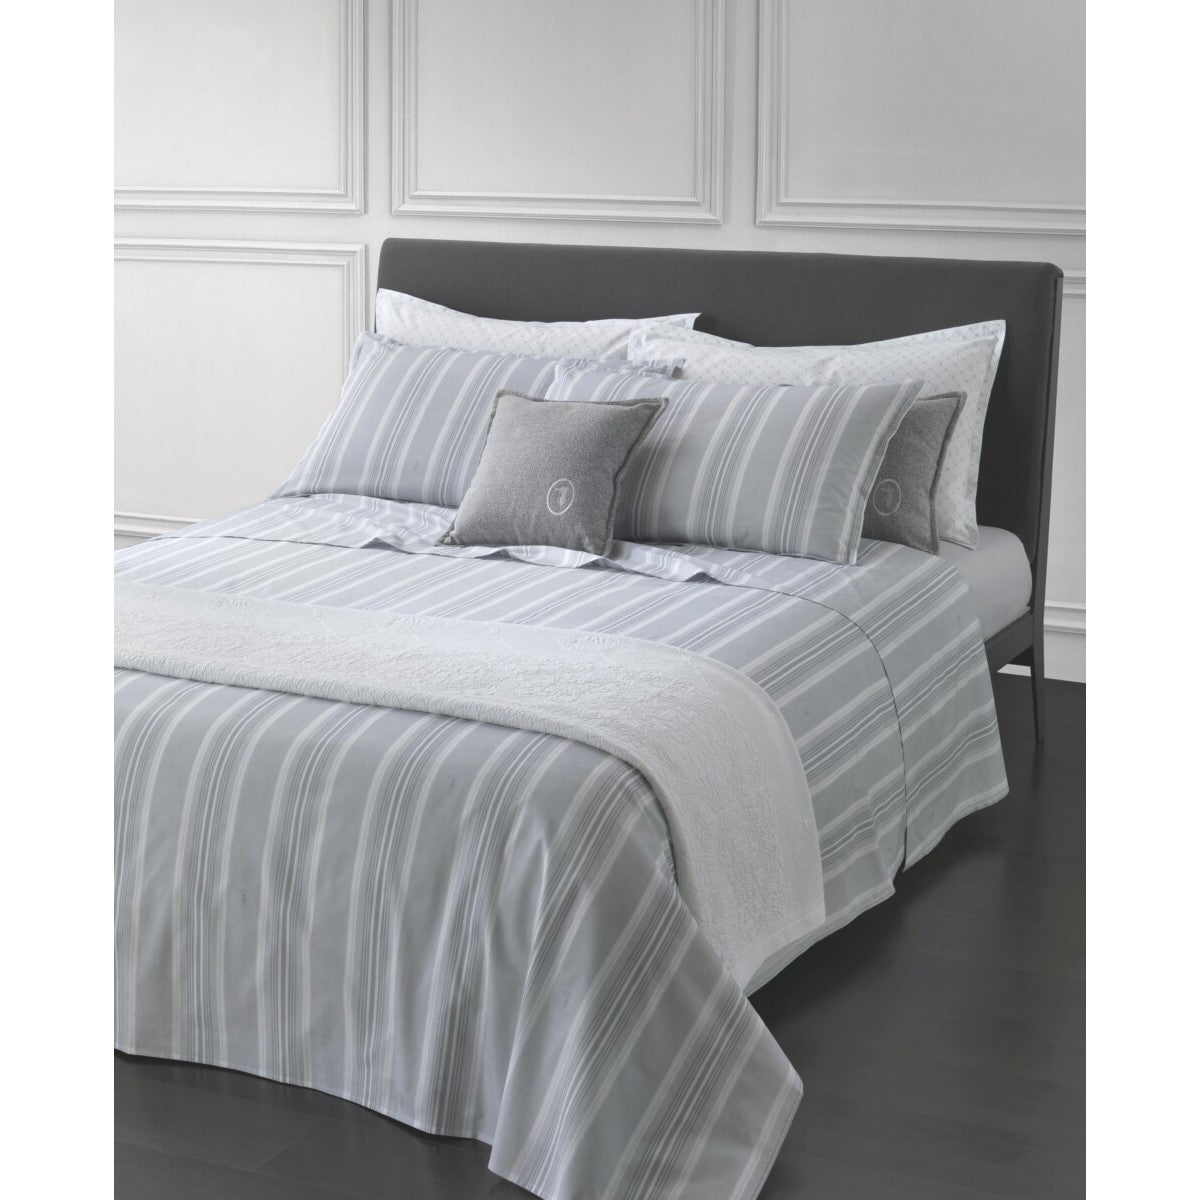 Bed linen set with duvet cover Stripes & Stripes